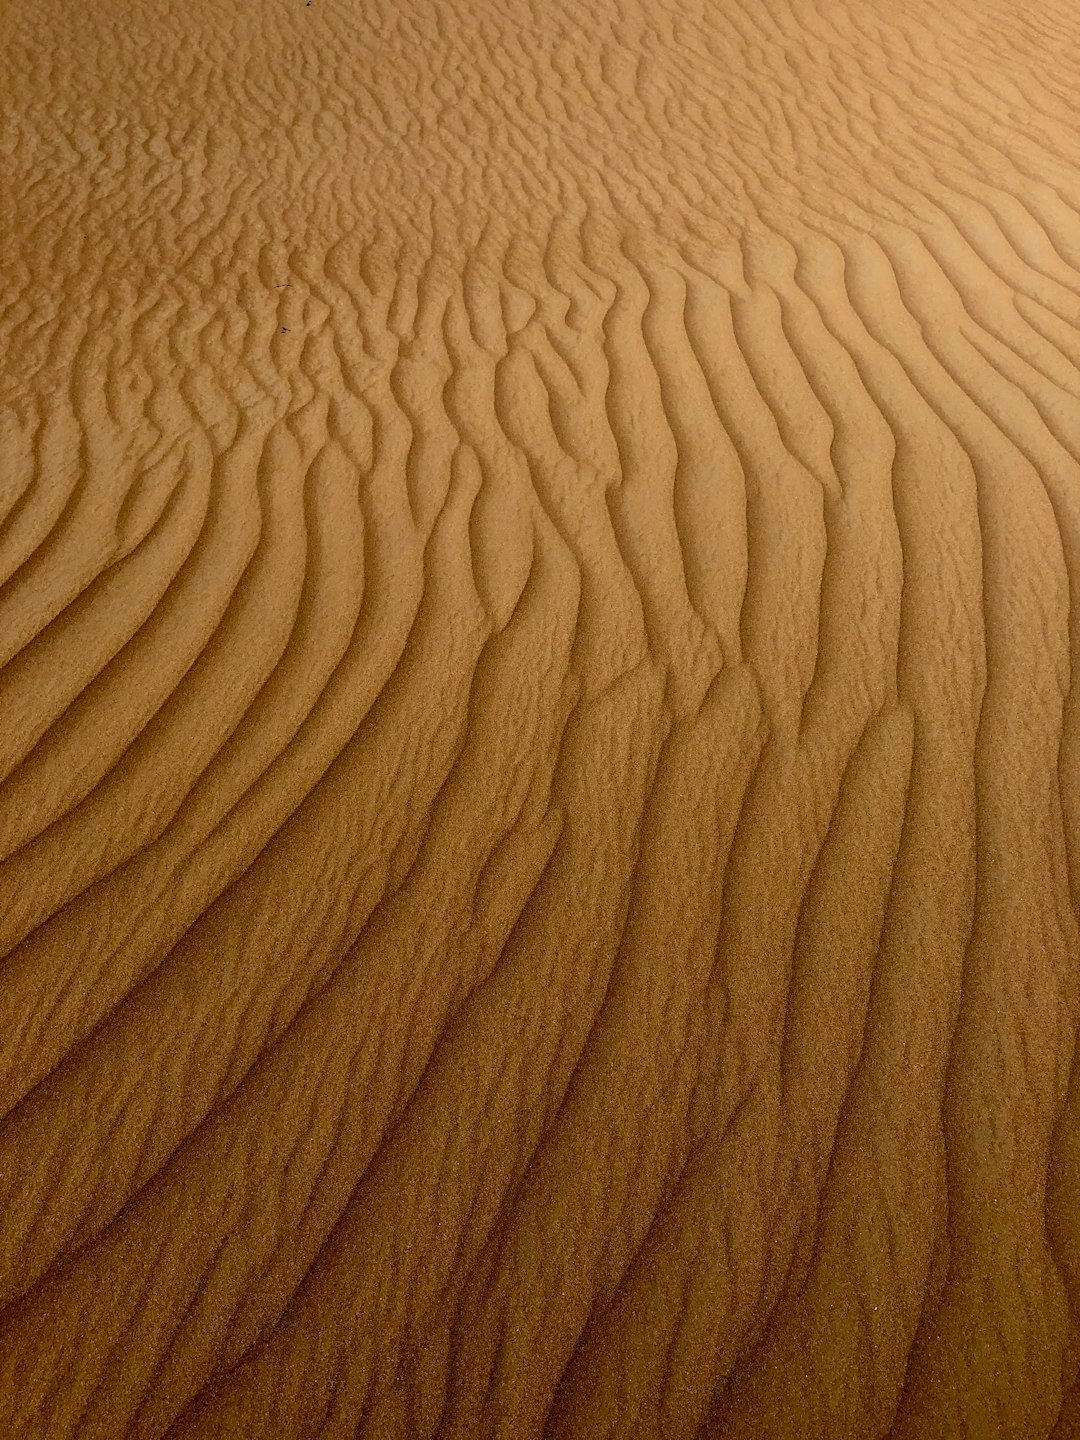 Desert photo spot Margham Safari Dubai